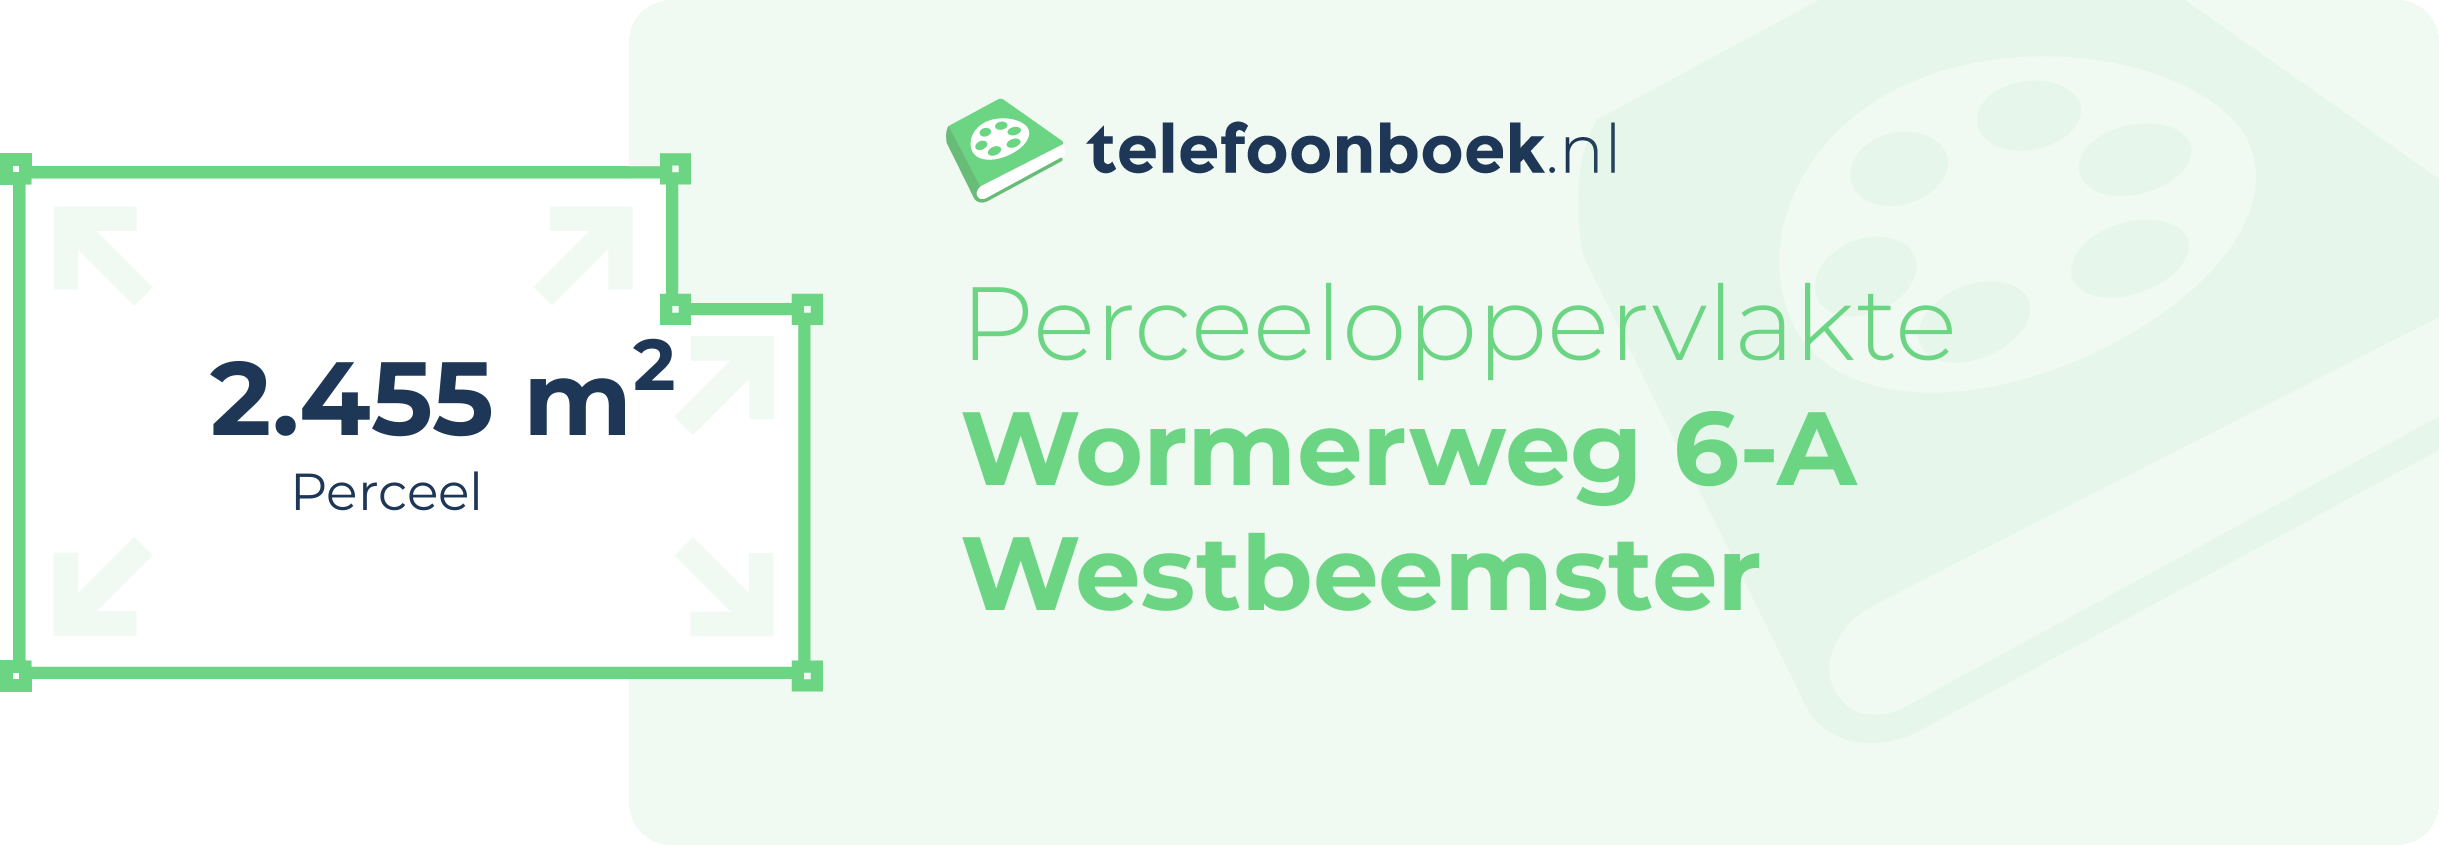 Perceeloppervlakte Wormerweg 6-A Westbeemster